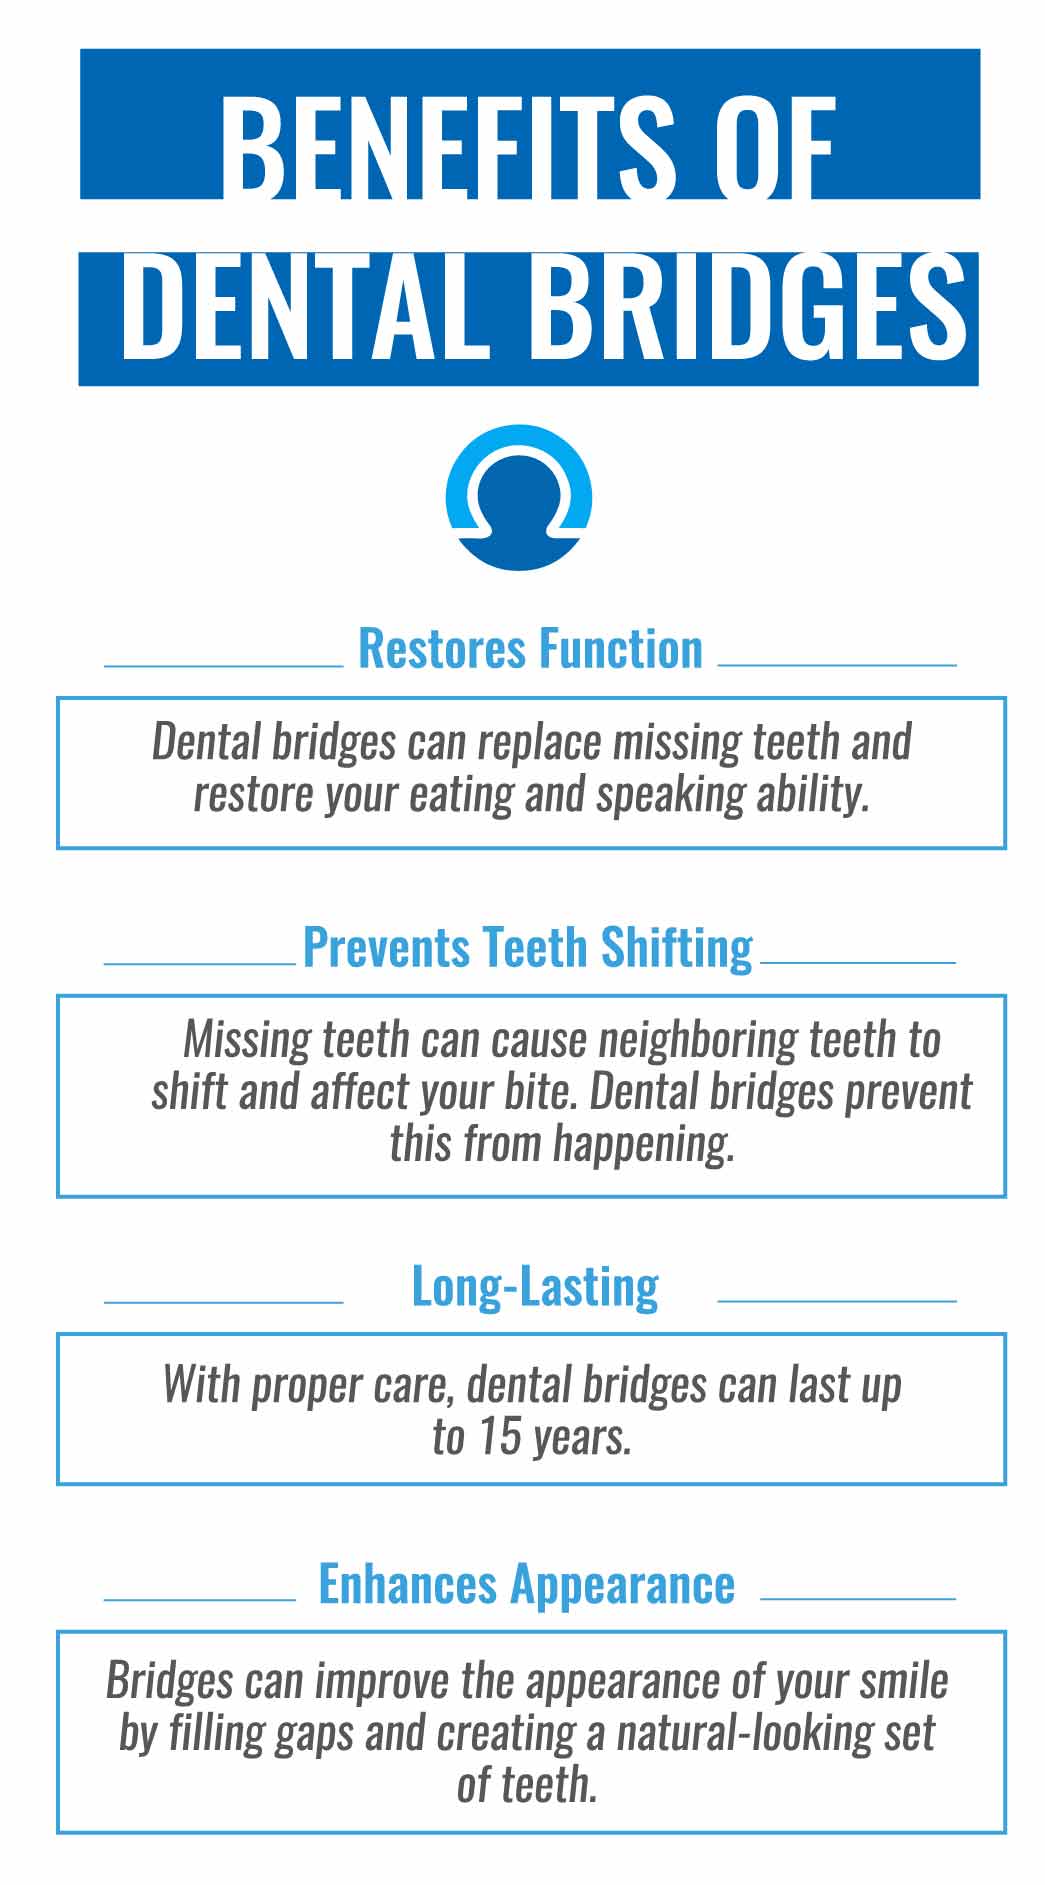 Benefits of Dental Bridges in Houston, Texas